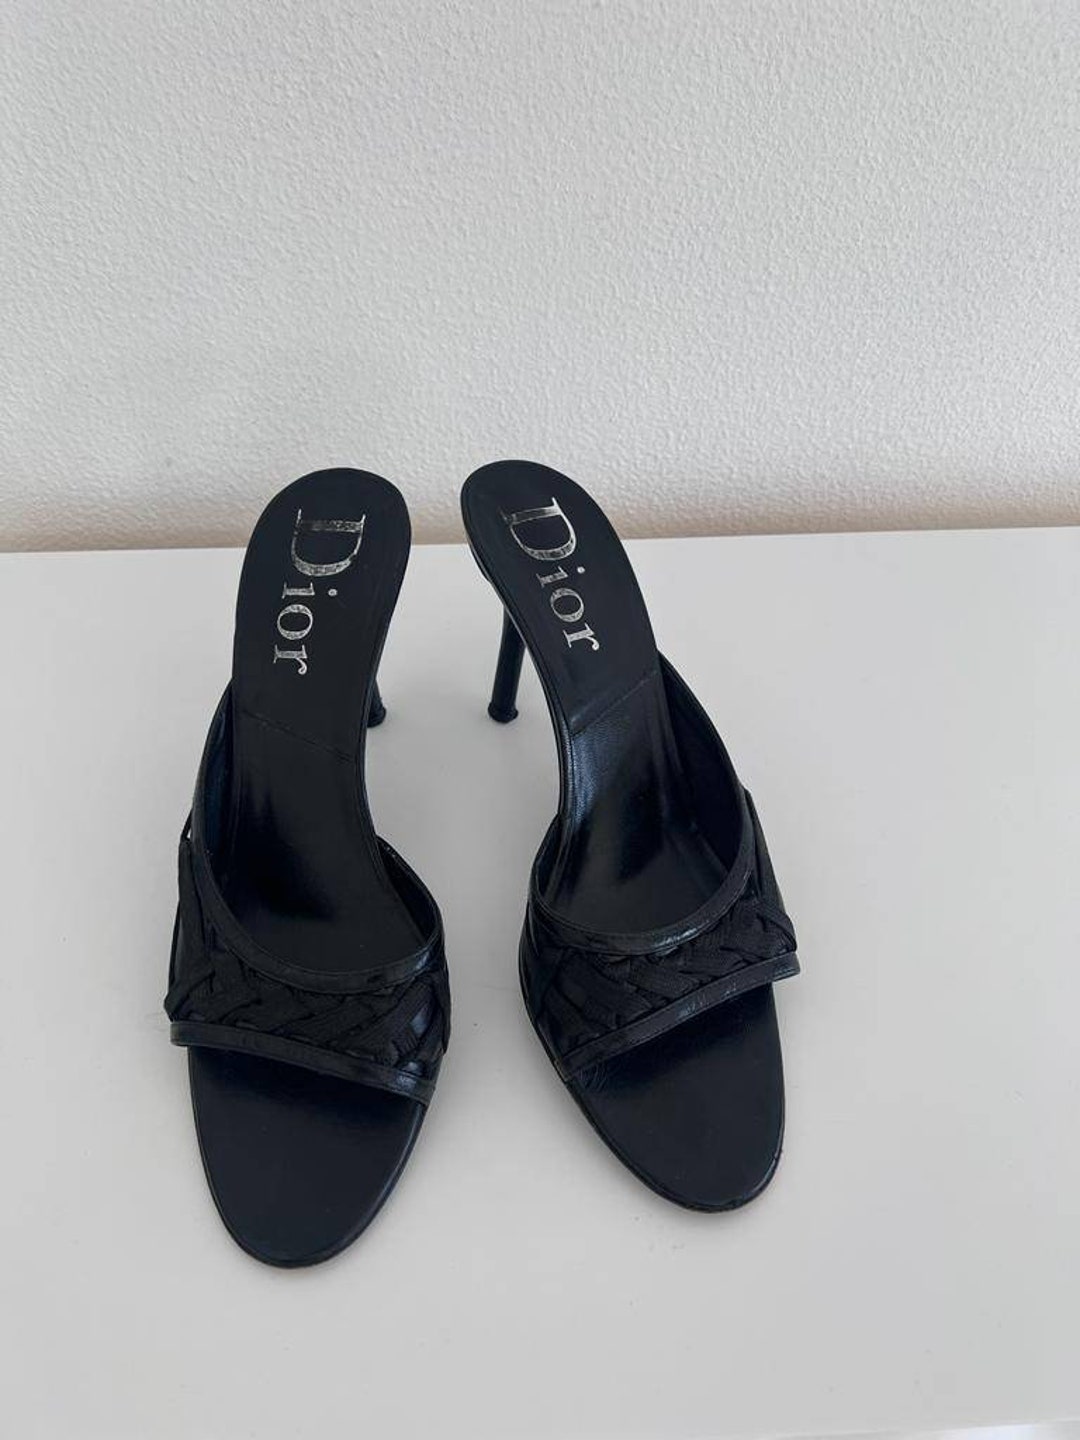 Christian Dior Black Sandal Mules Pumps With Art Lace Details - Etsy